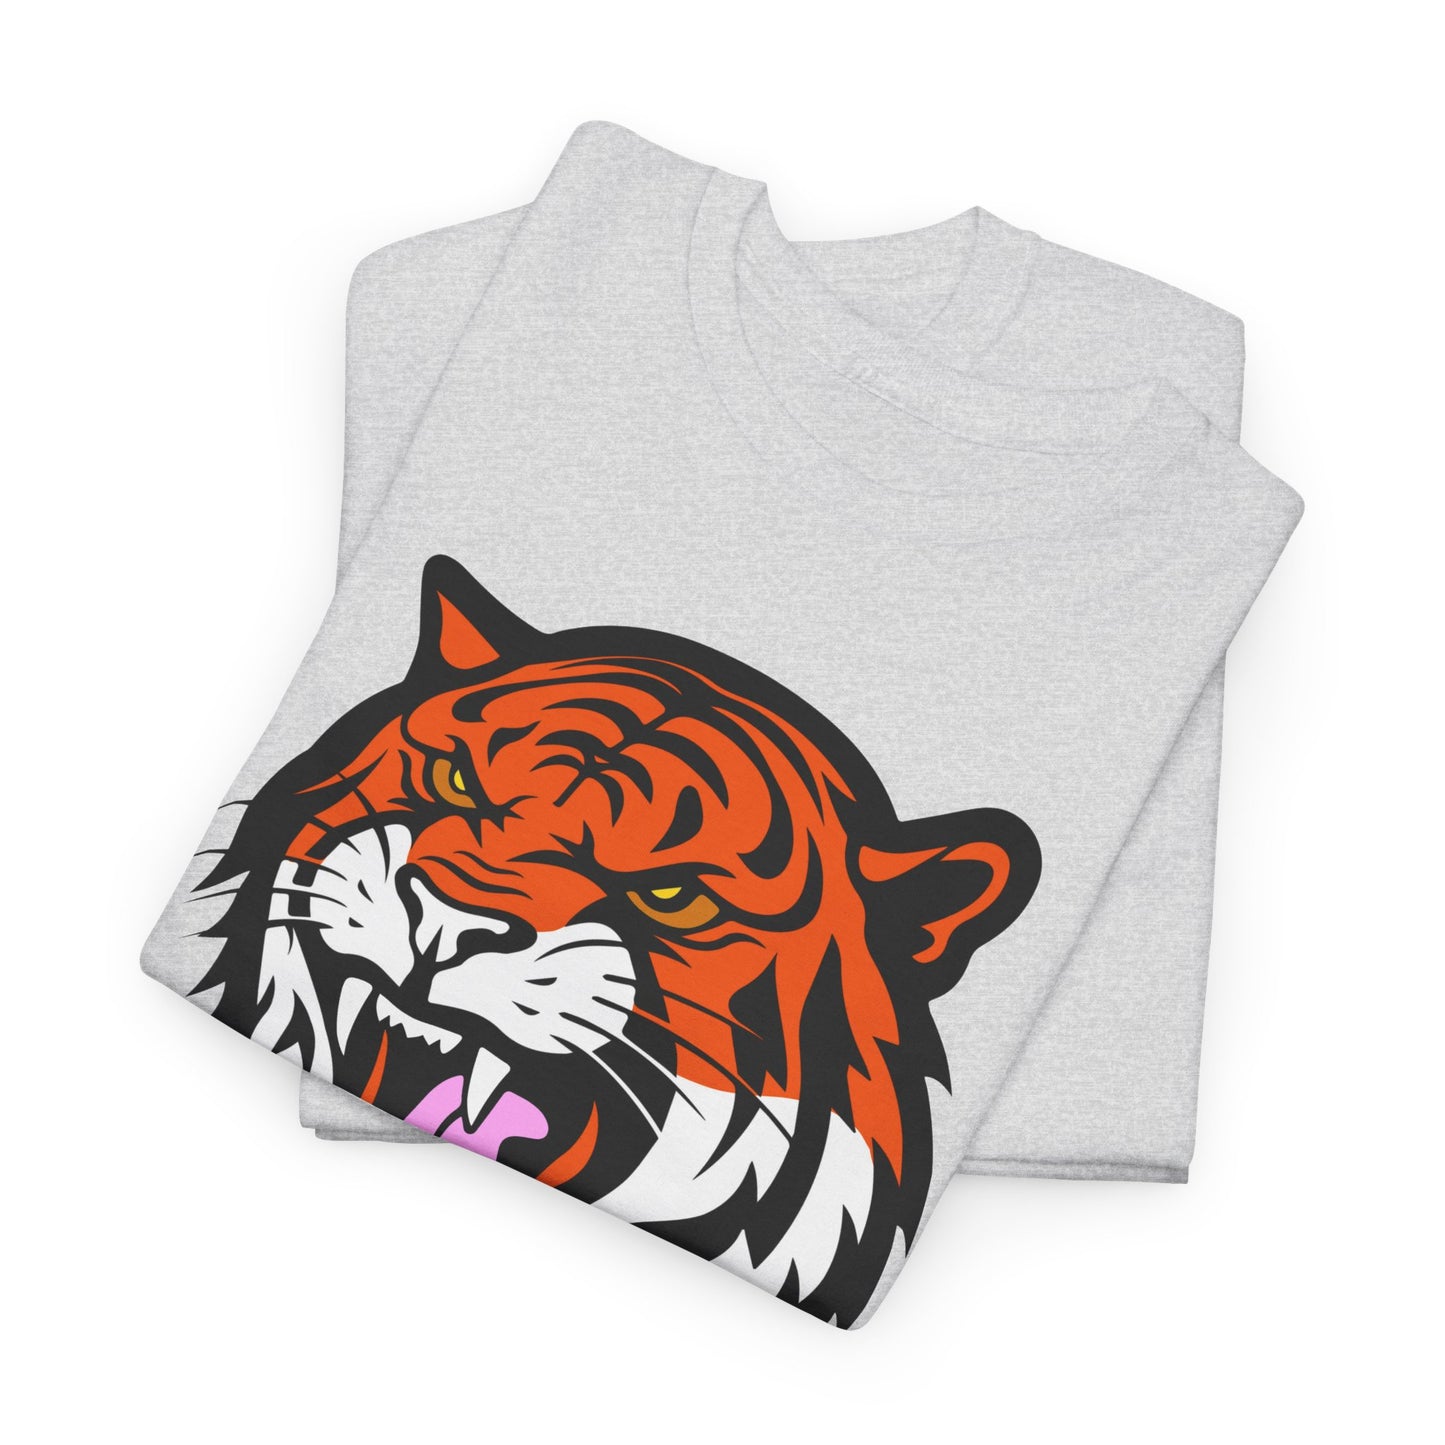 Tiger Head Team Tee - Craftee Designs & Prints 